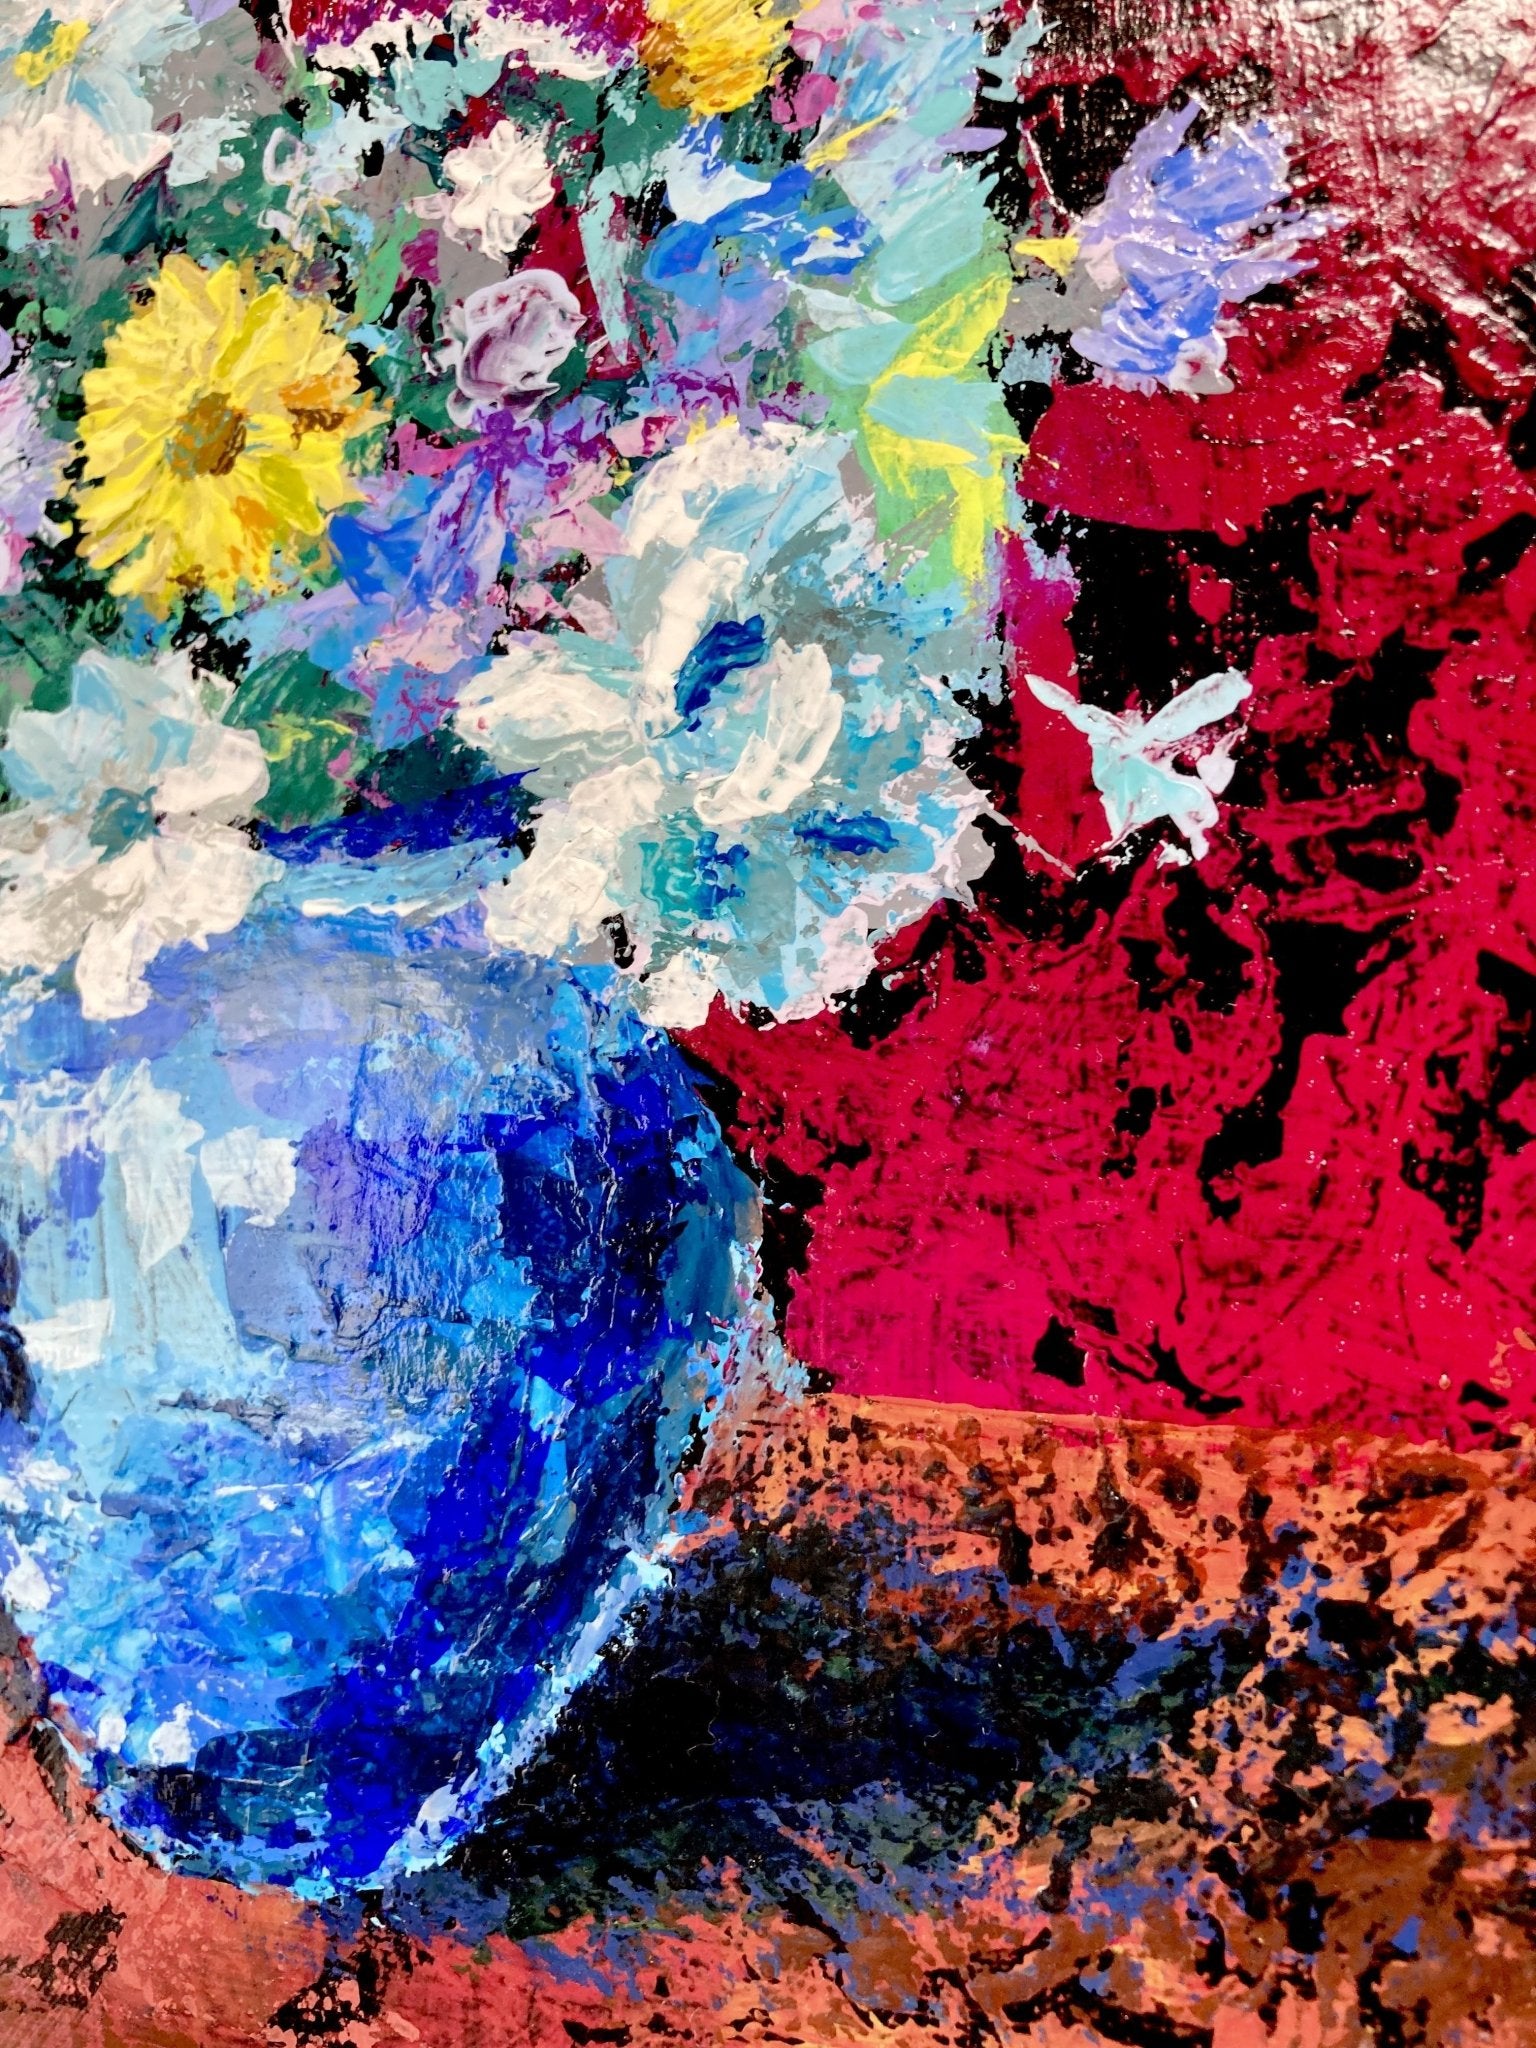 Flores pulchri florentes - FROM ARTIST